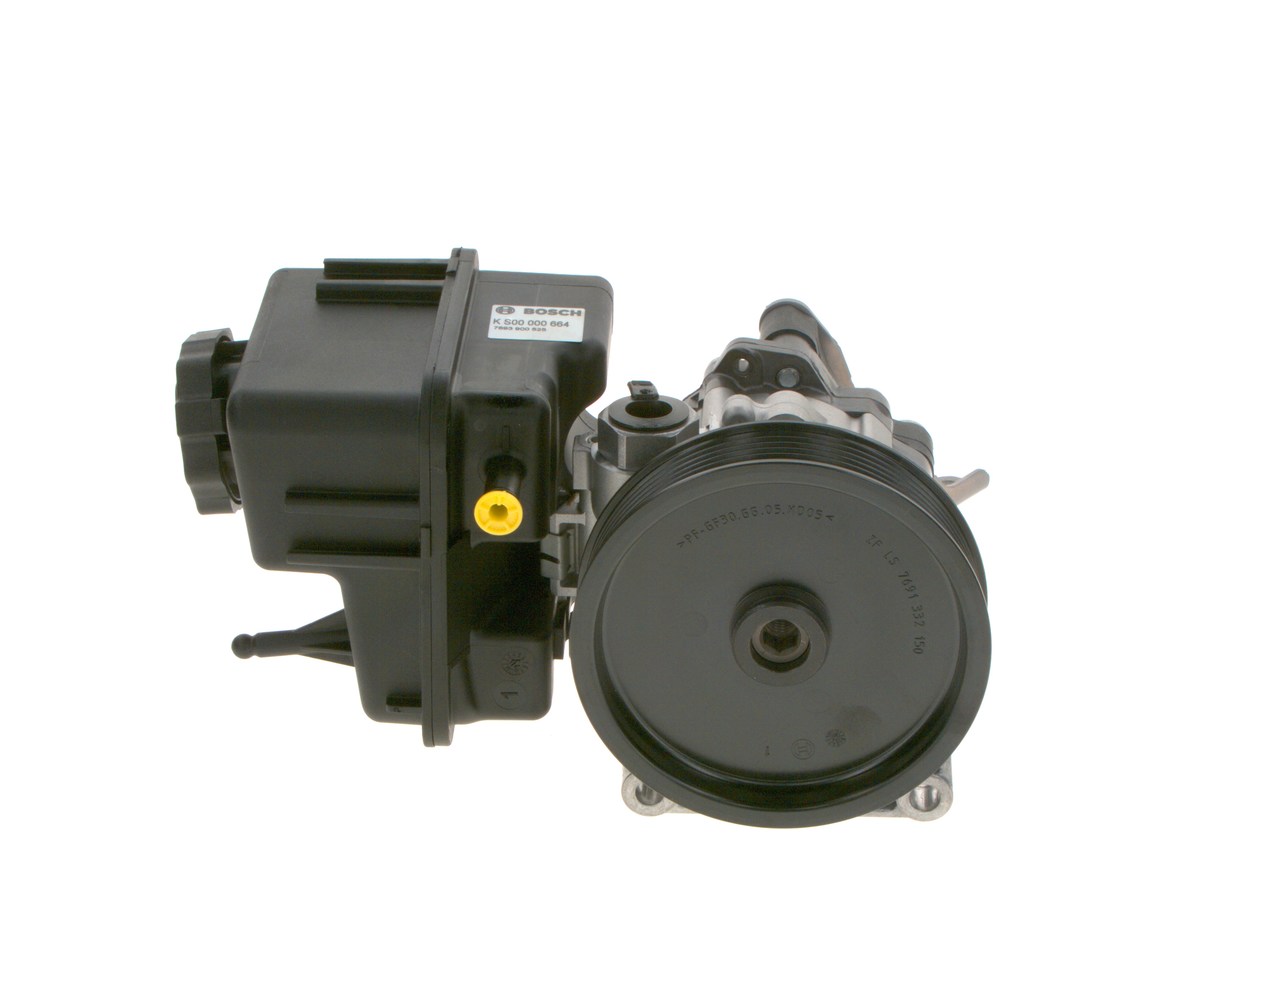 BOSCH K S00 000 664 Power steering pump Hydraulic, Pressure-limiting Valve, Vane Pump, Clockwise rotation